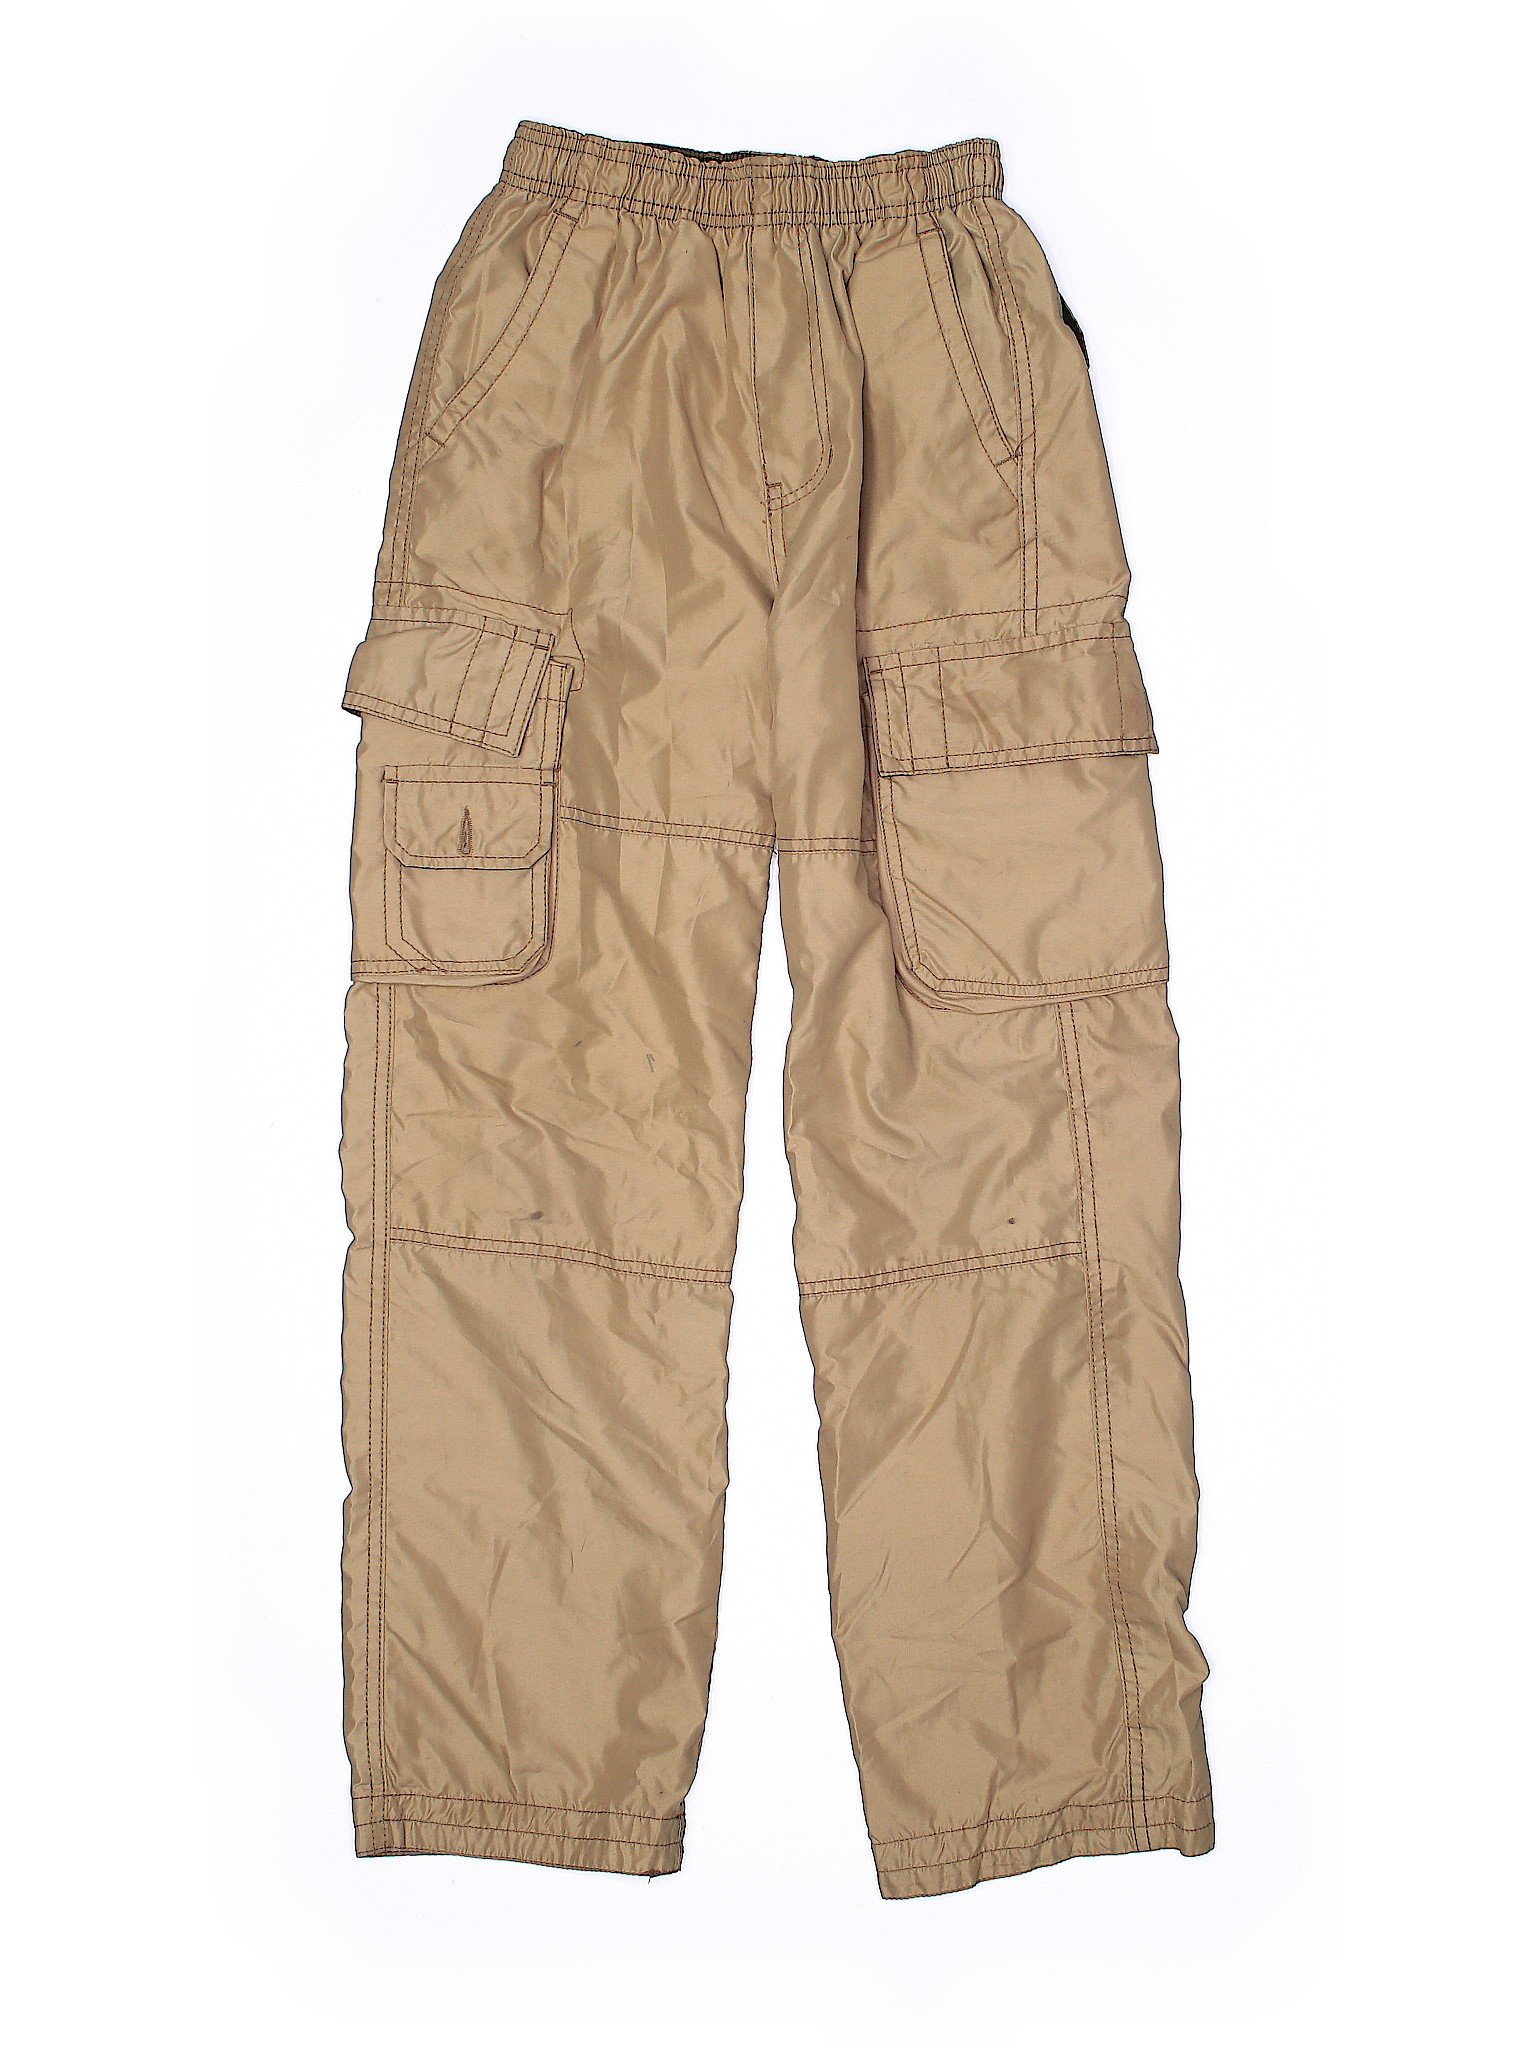 Wear First Boys Brown Cargo Pants Large kids | eBay